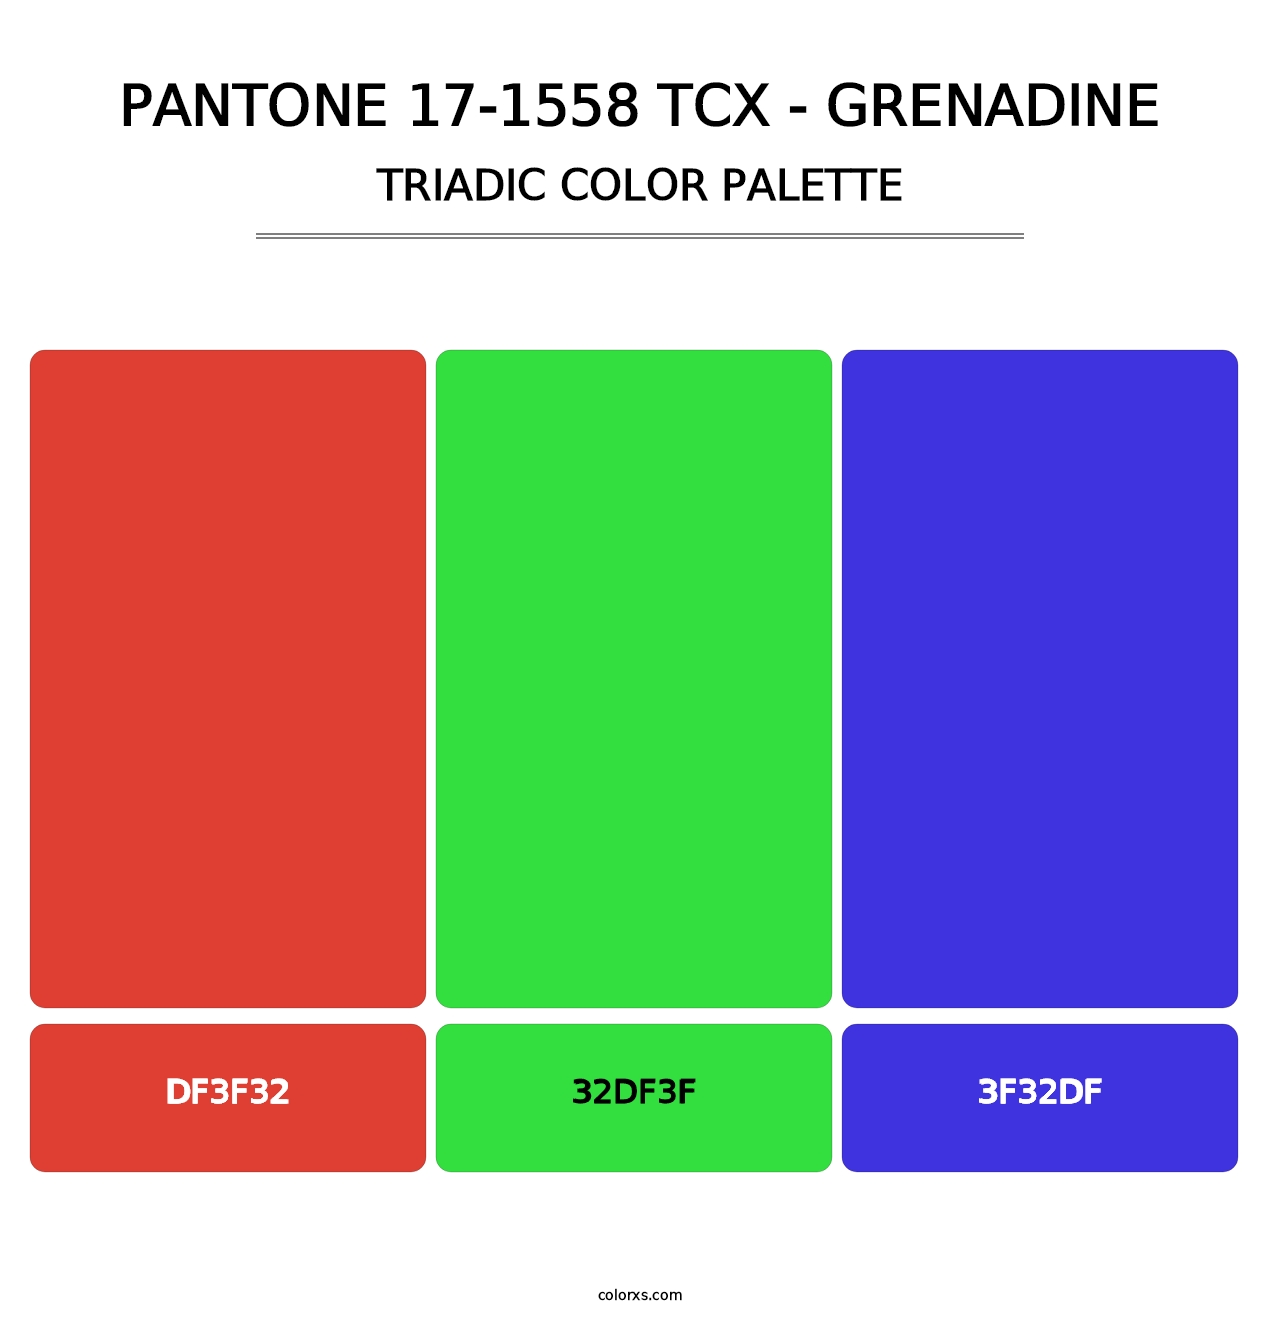 PANTONE 17-1558 TCX - Grenadine - Triadic Color Palette